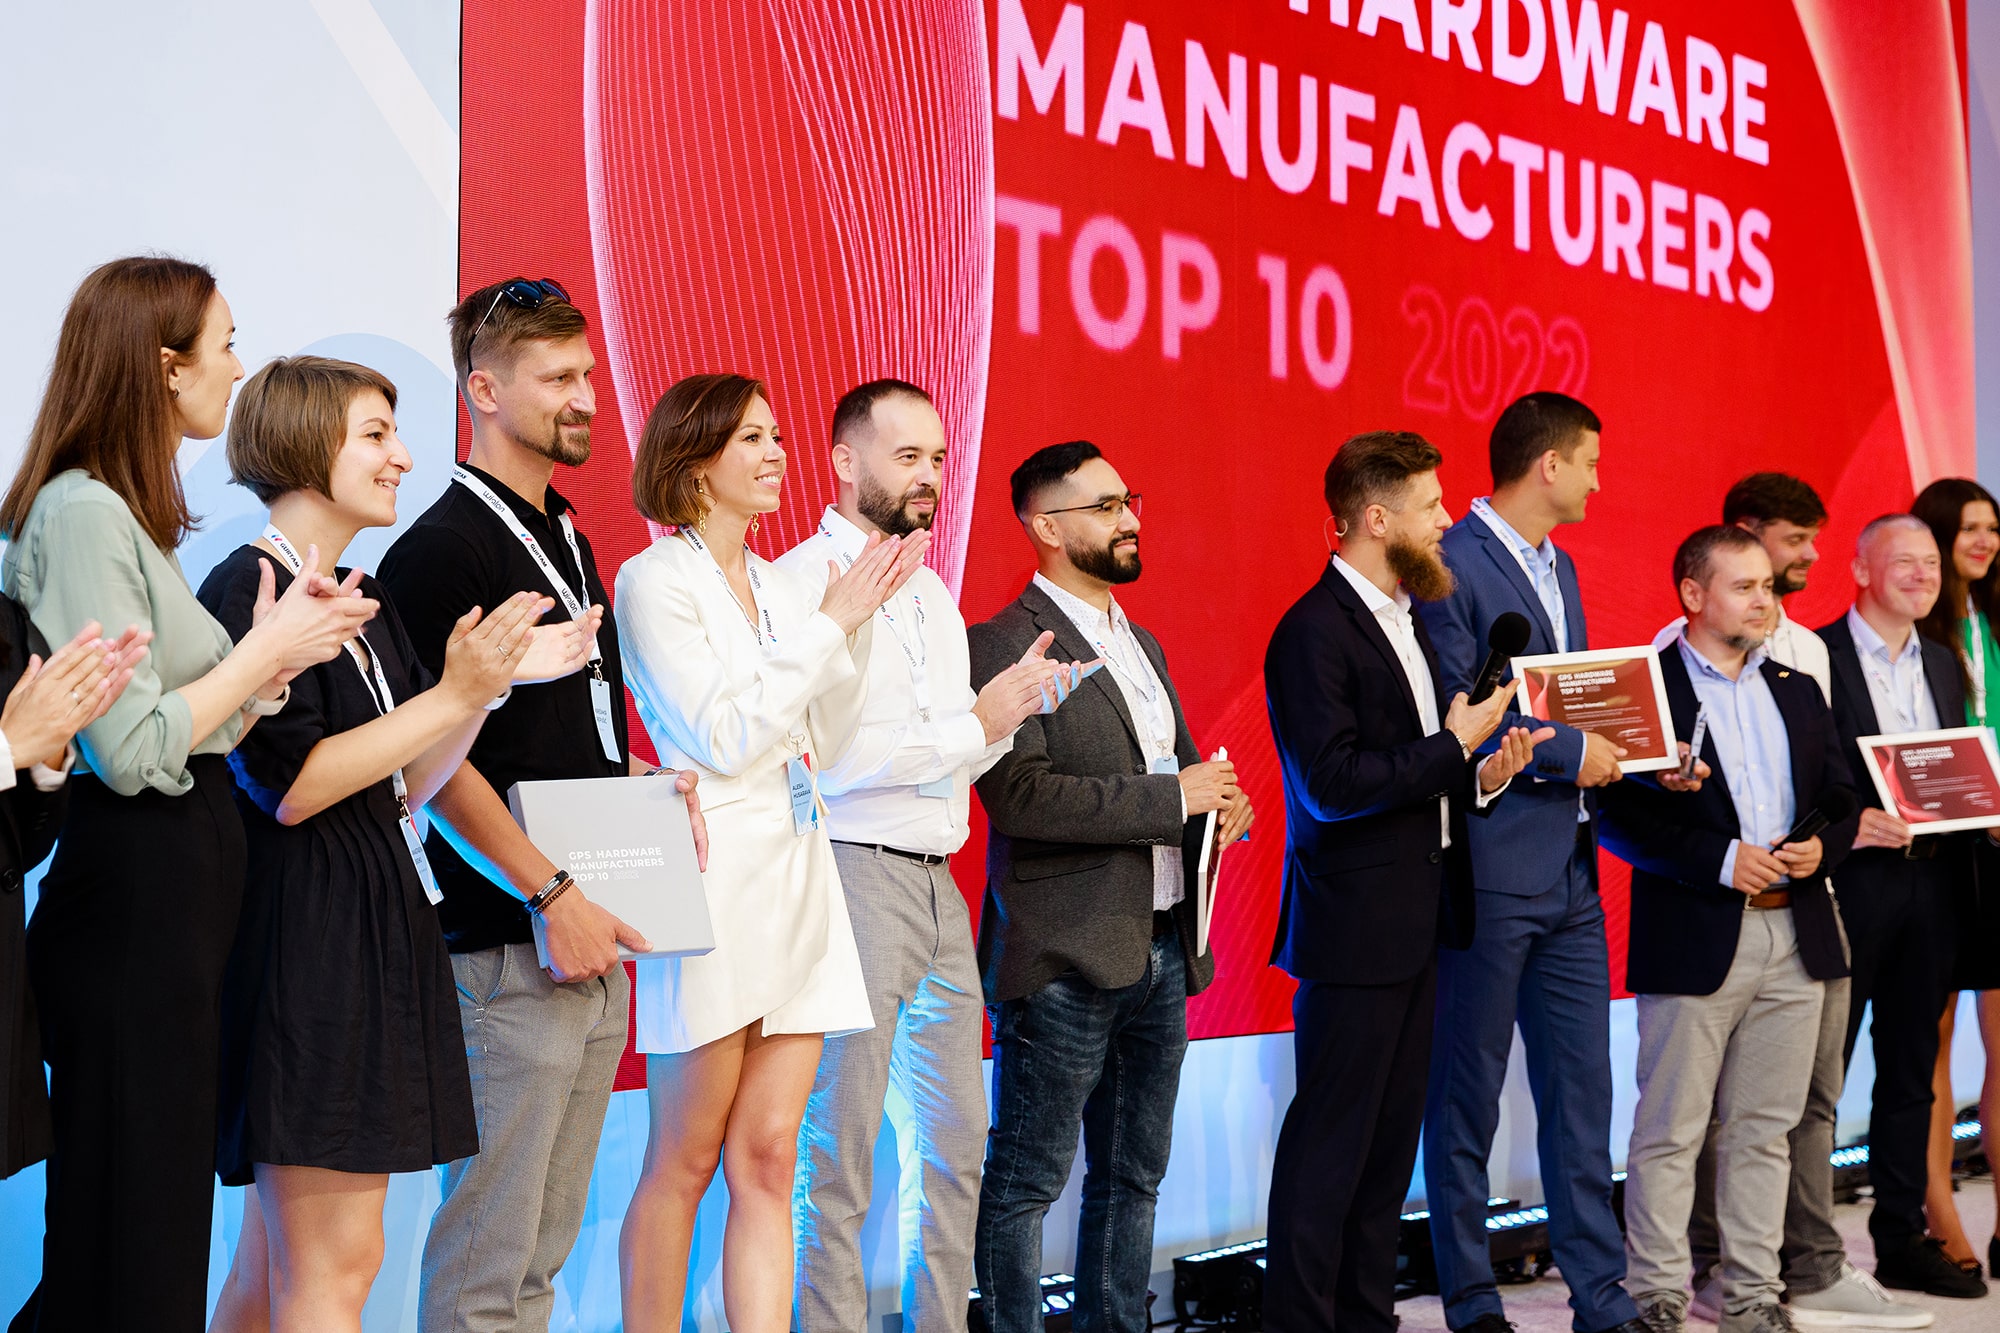 gps hardware manufacturers top 10 winners